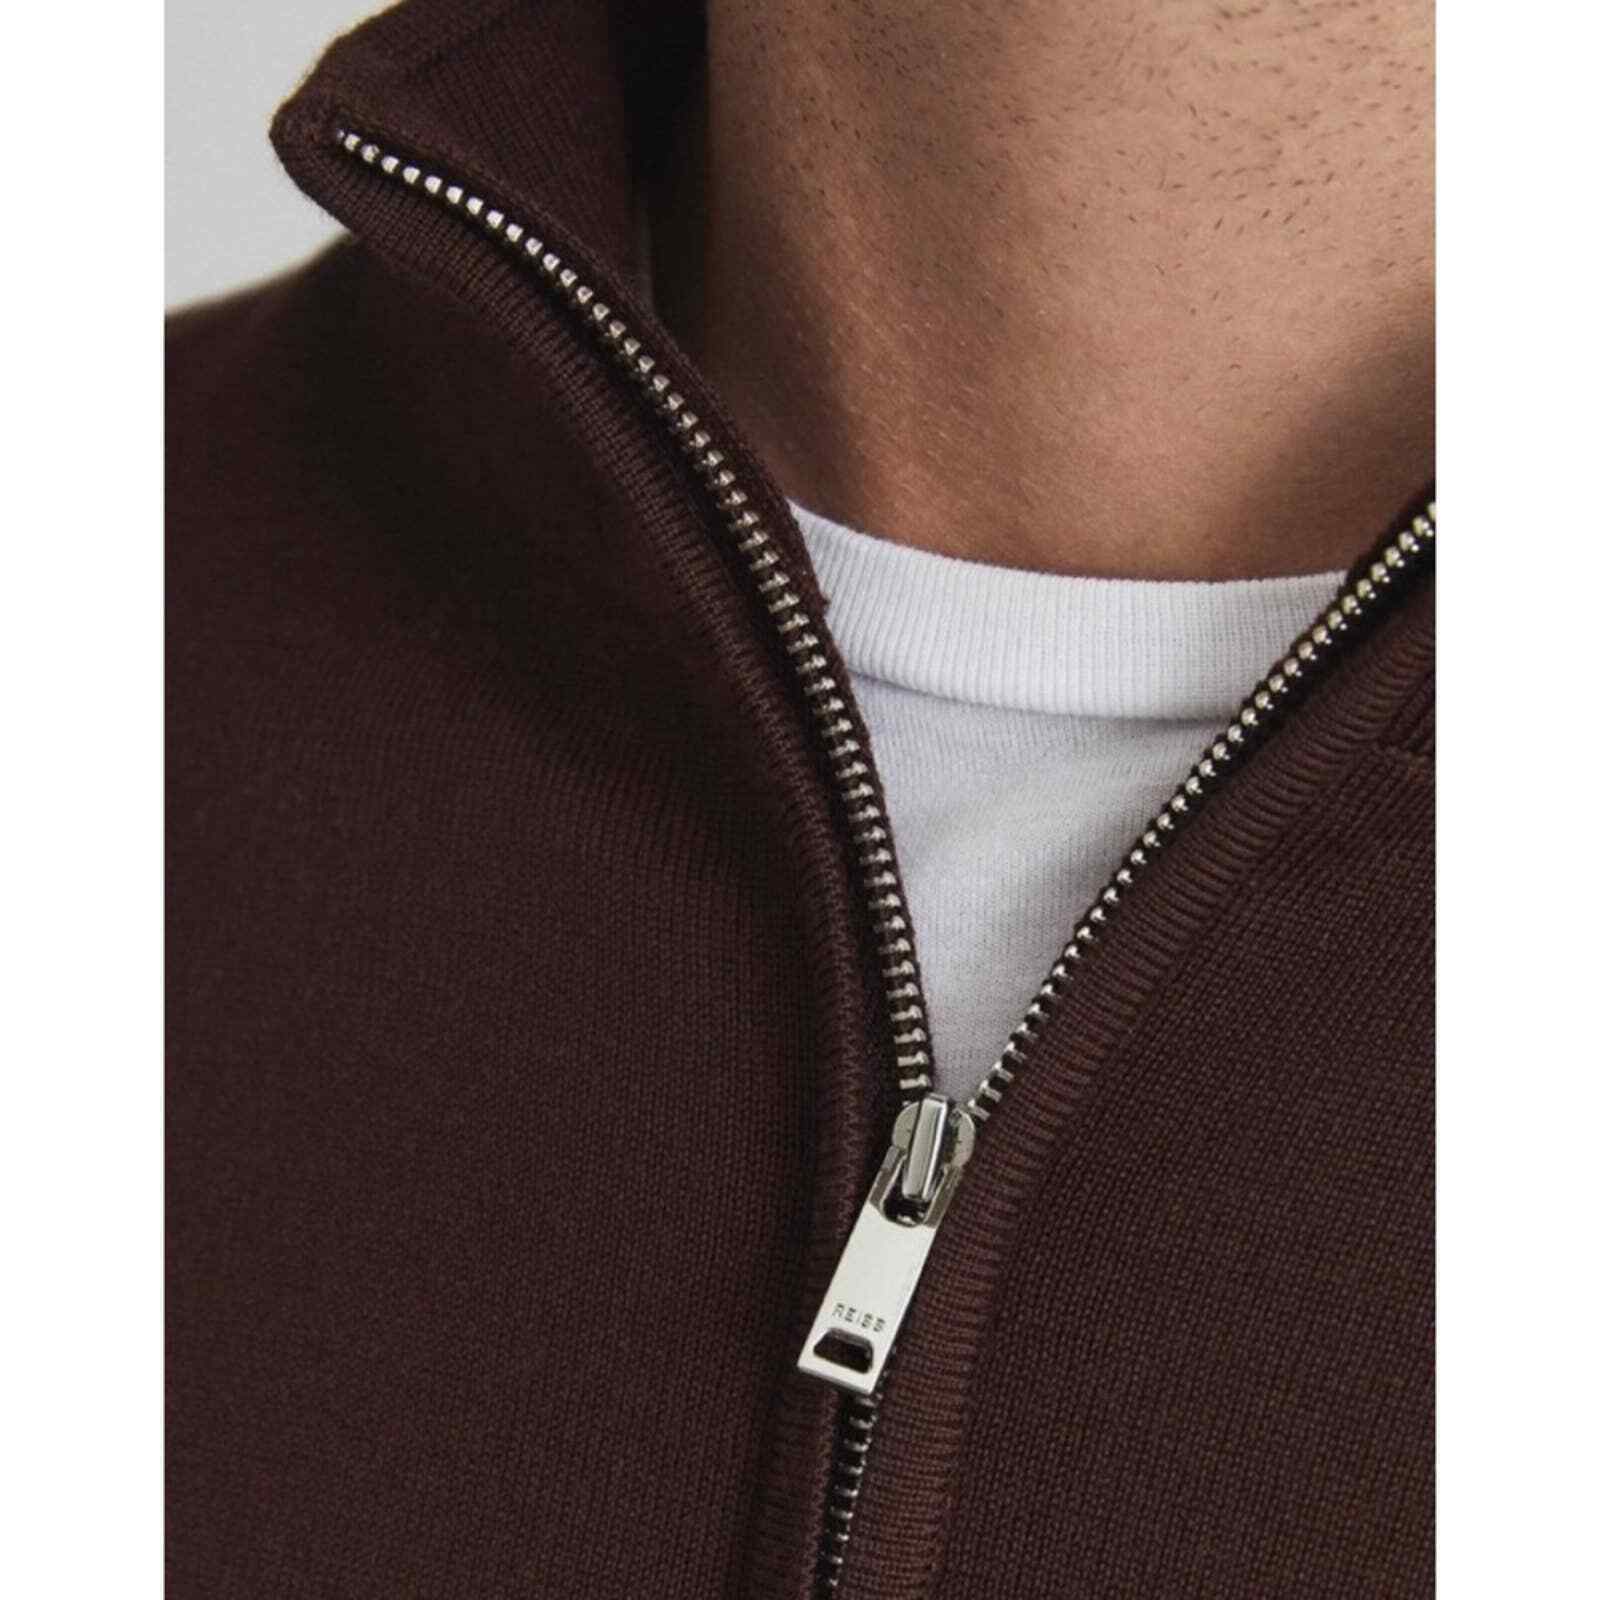 NWT Reiss Blackhall Merino Wool Zip Sweater (size XL) | eBay